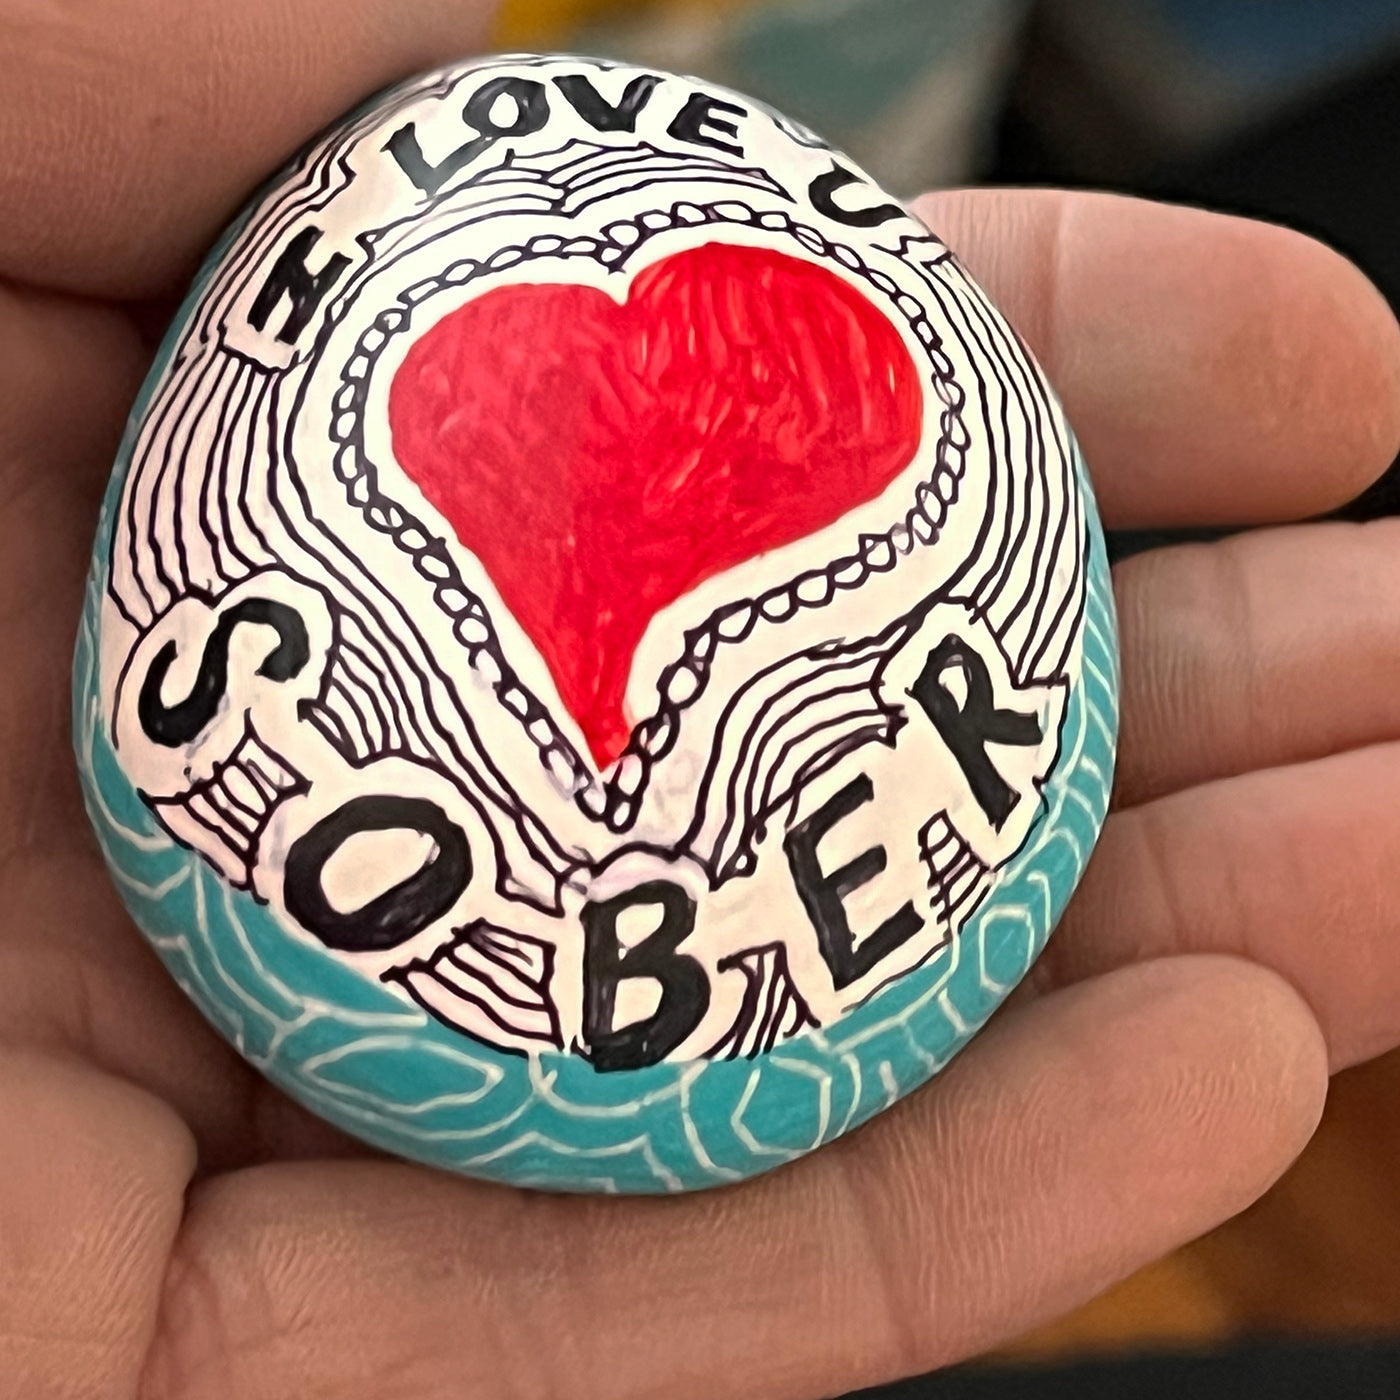 Hand painted sobriety stone - "I Love U Sober #1"